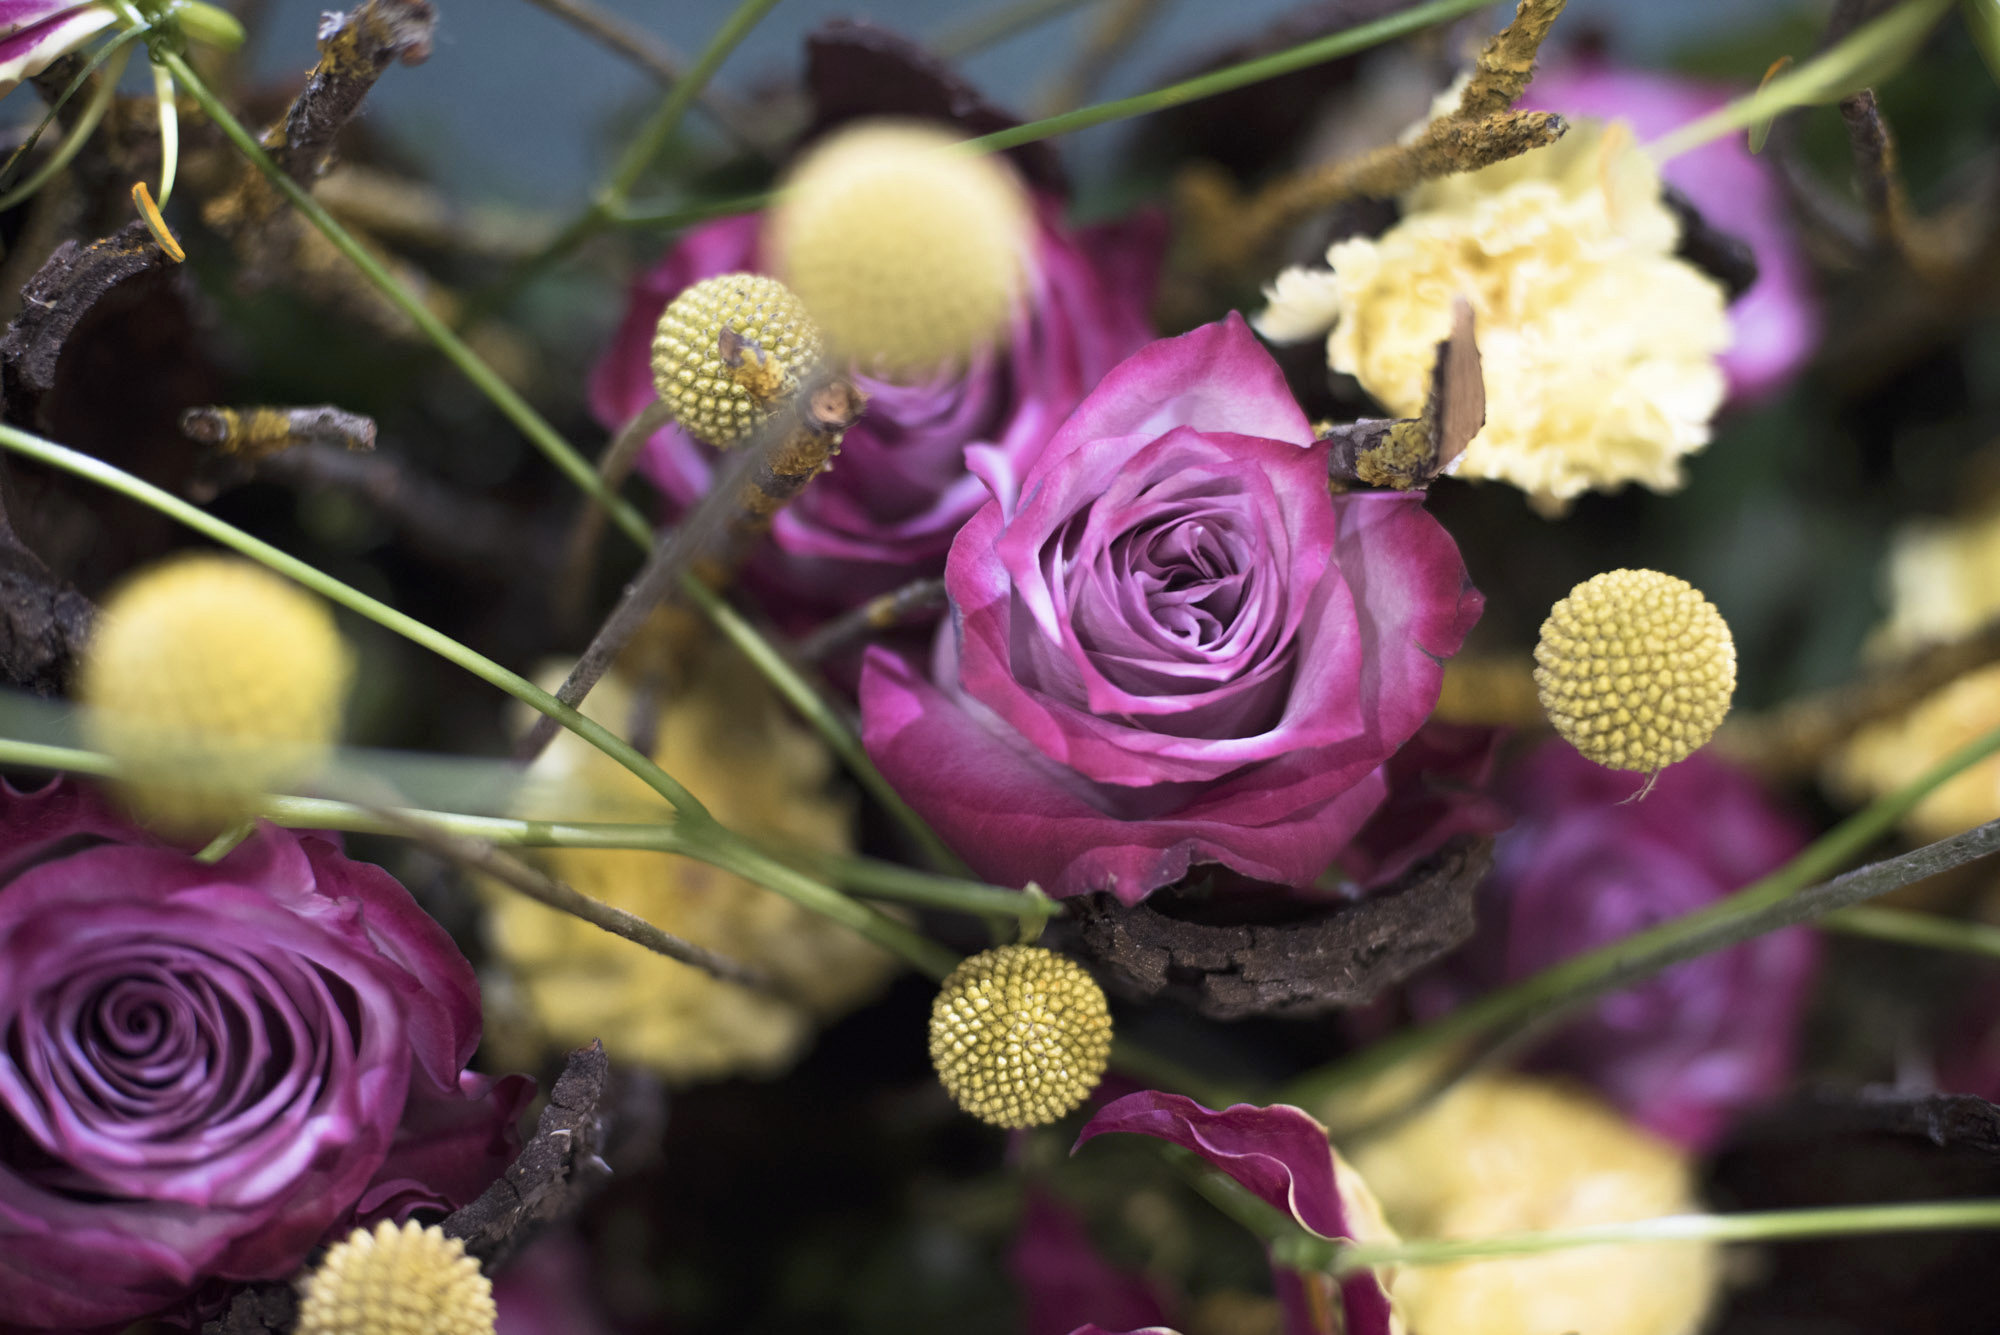 Poland’s floral design champion Tomàsz Max Kuczyński Joined us on 'Rose